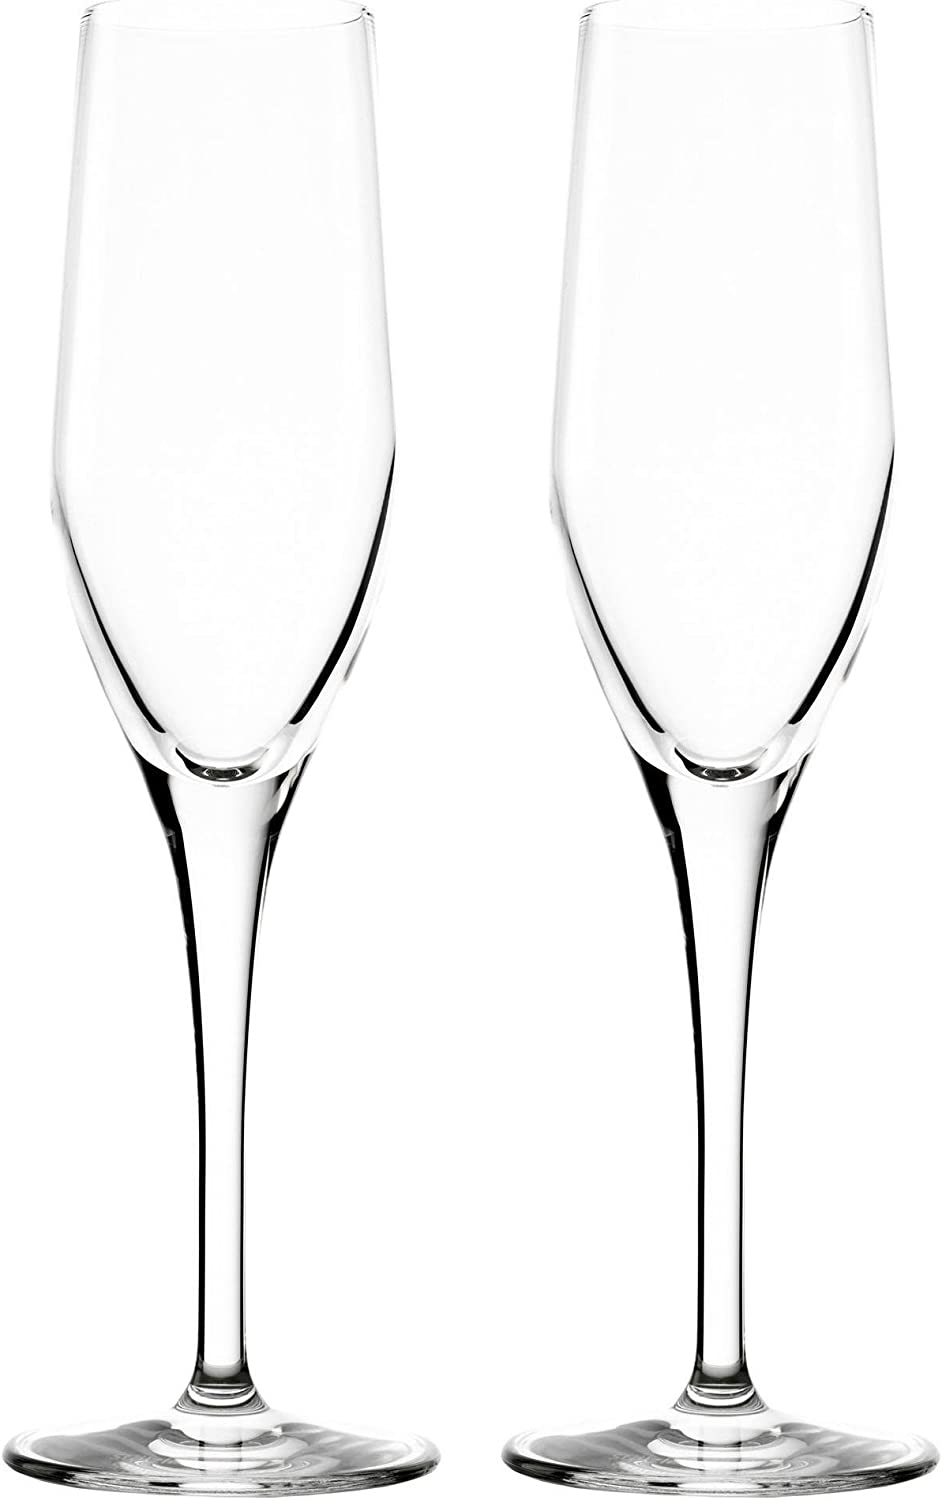 \ 'Stölzle SZ147 0007 Champagne Glasses Set of 2